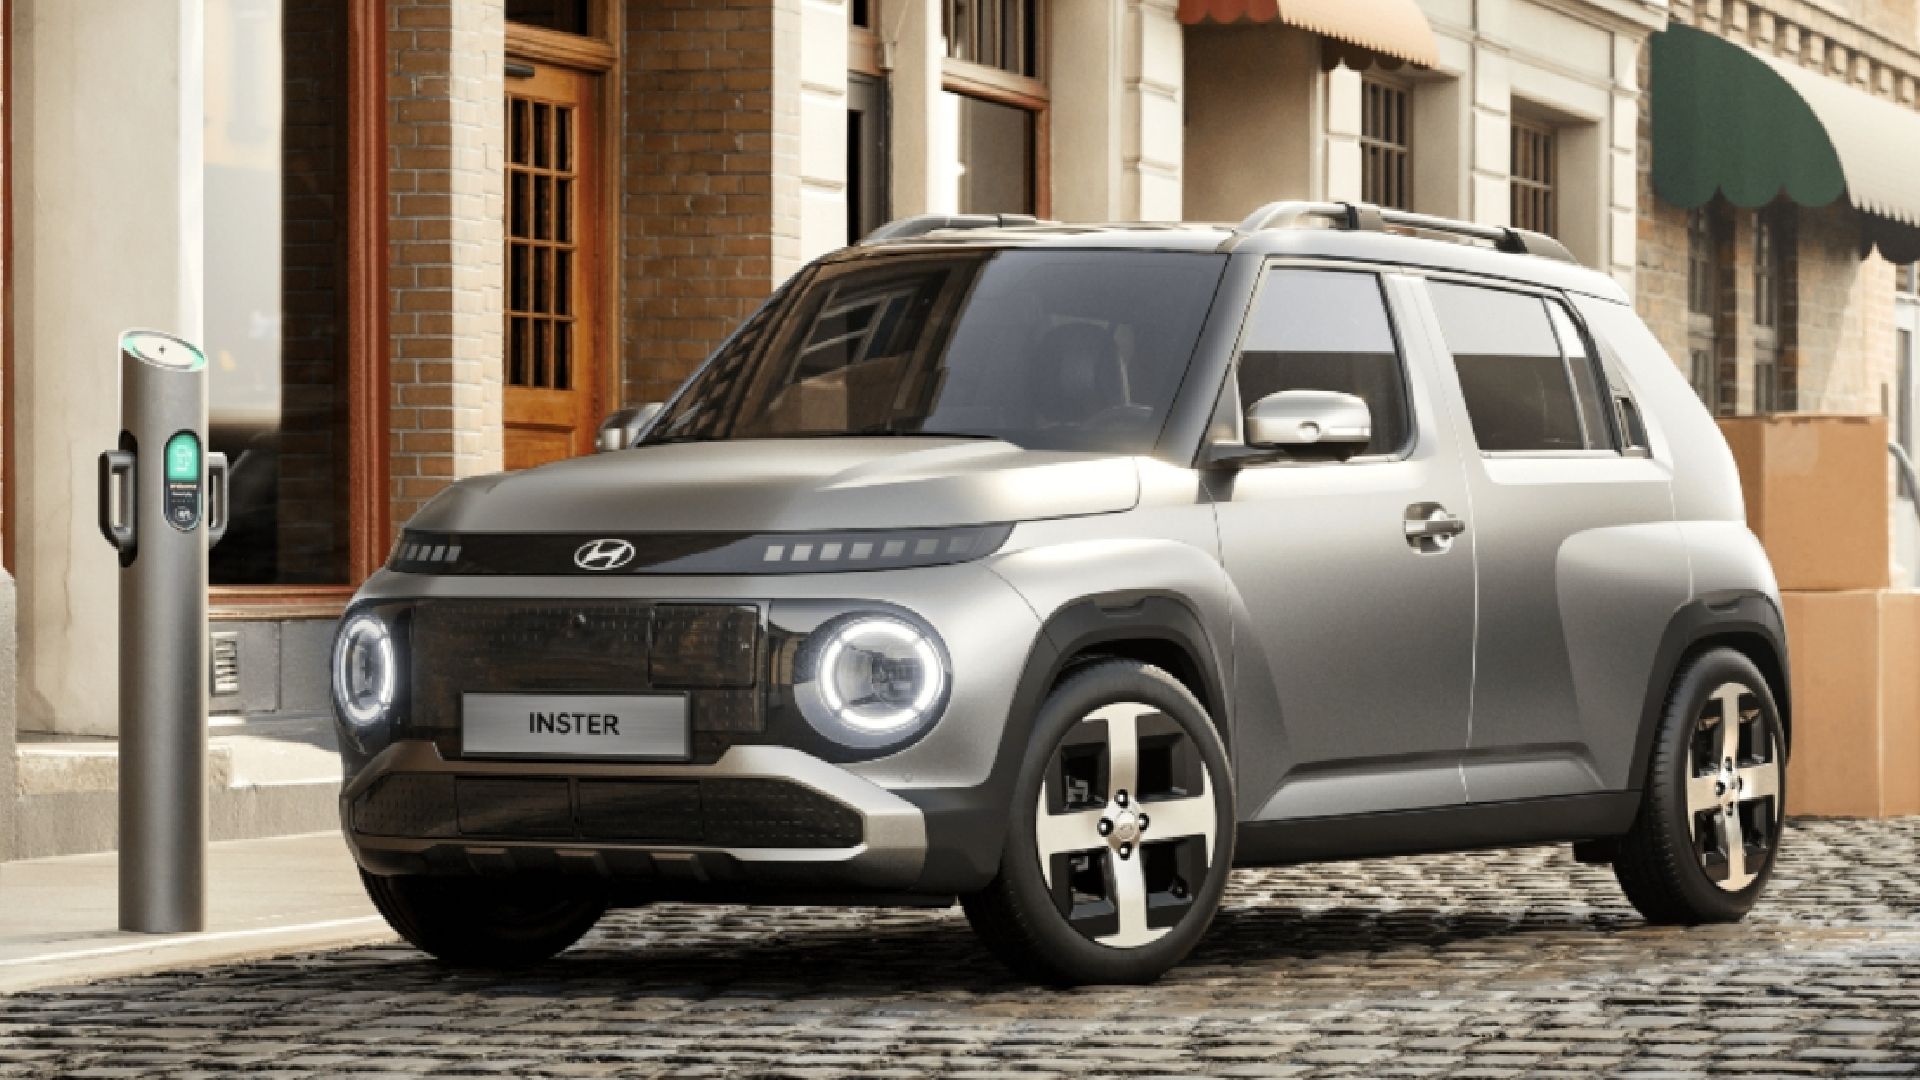 Hyundai Inster Small Electric SUV Unveiled (Source: Hyundai)